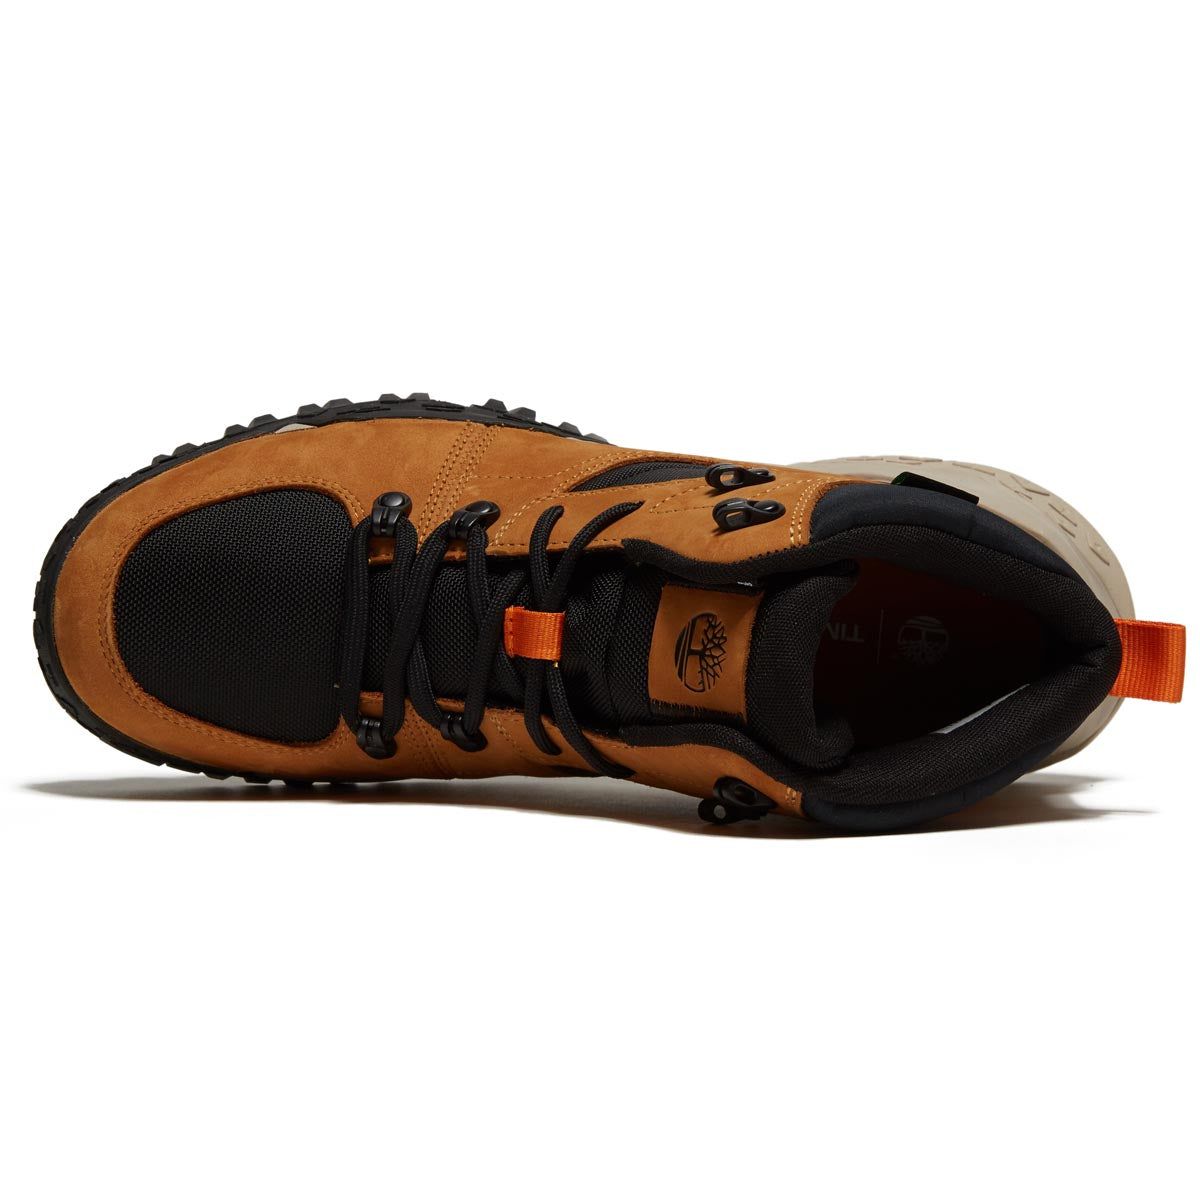 Timberland Motion Scramble Mid Lace Up Wp Shoes - Wheat Nubuck image 3